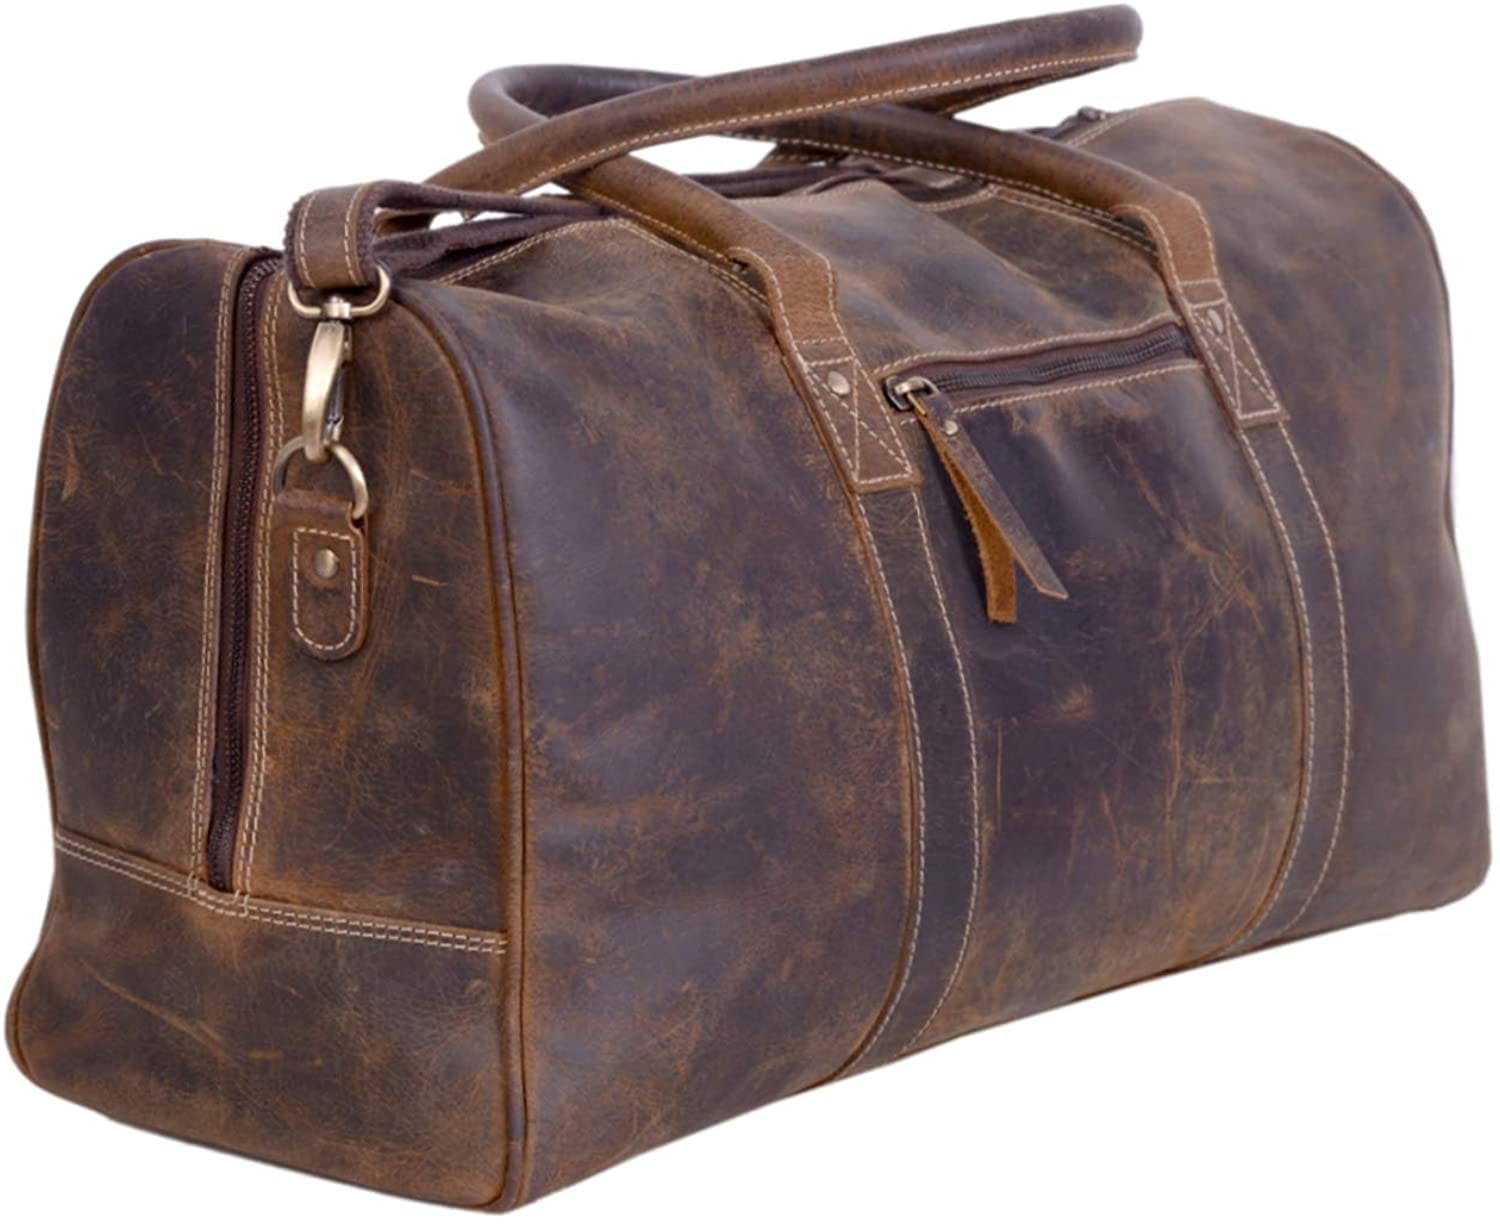 Drinking Water Duffel Bag Vintage Weekender Overnight Bag Travel Tote Luggage Sports Duffle 